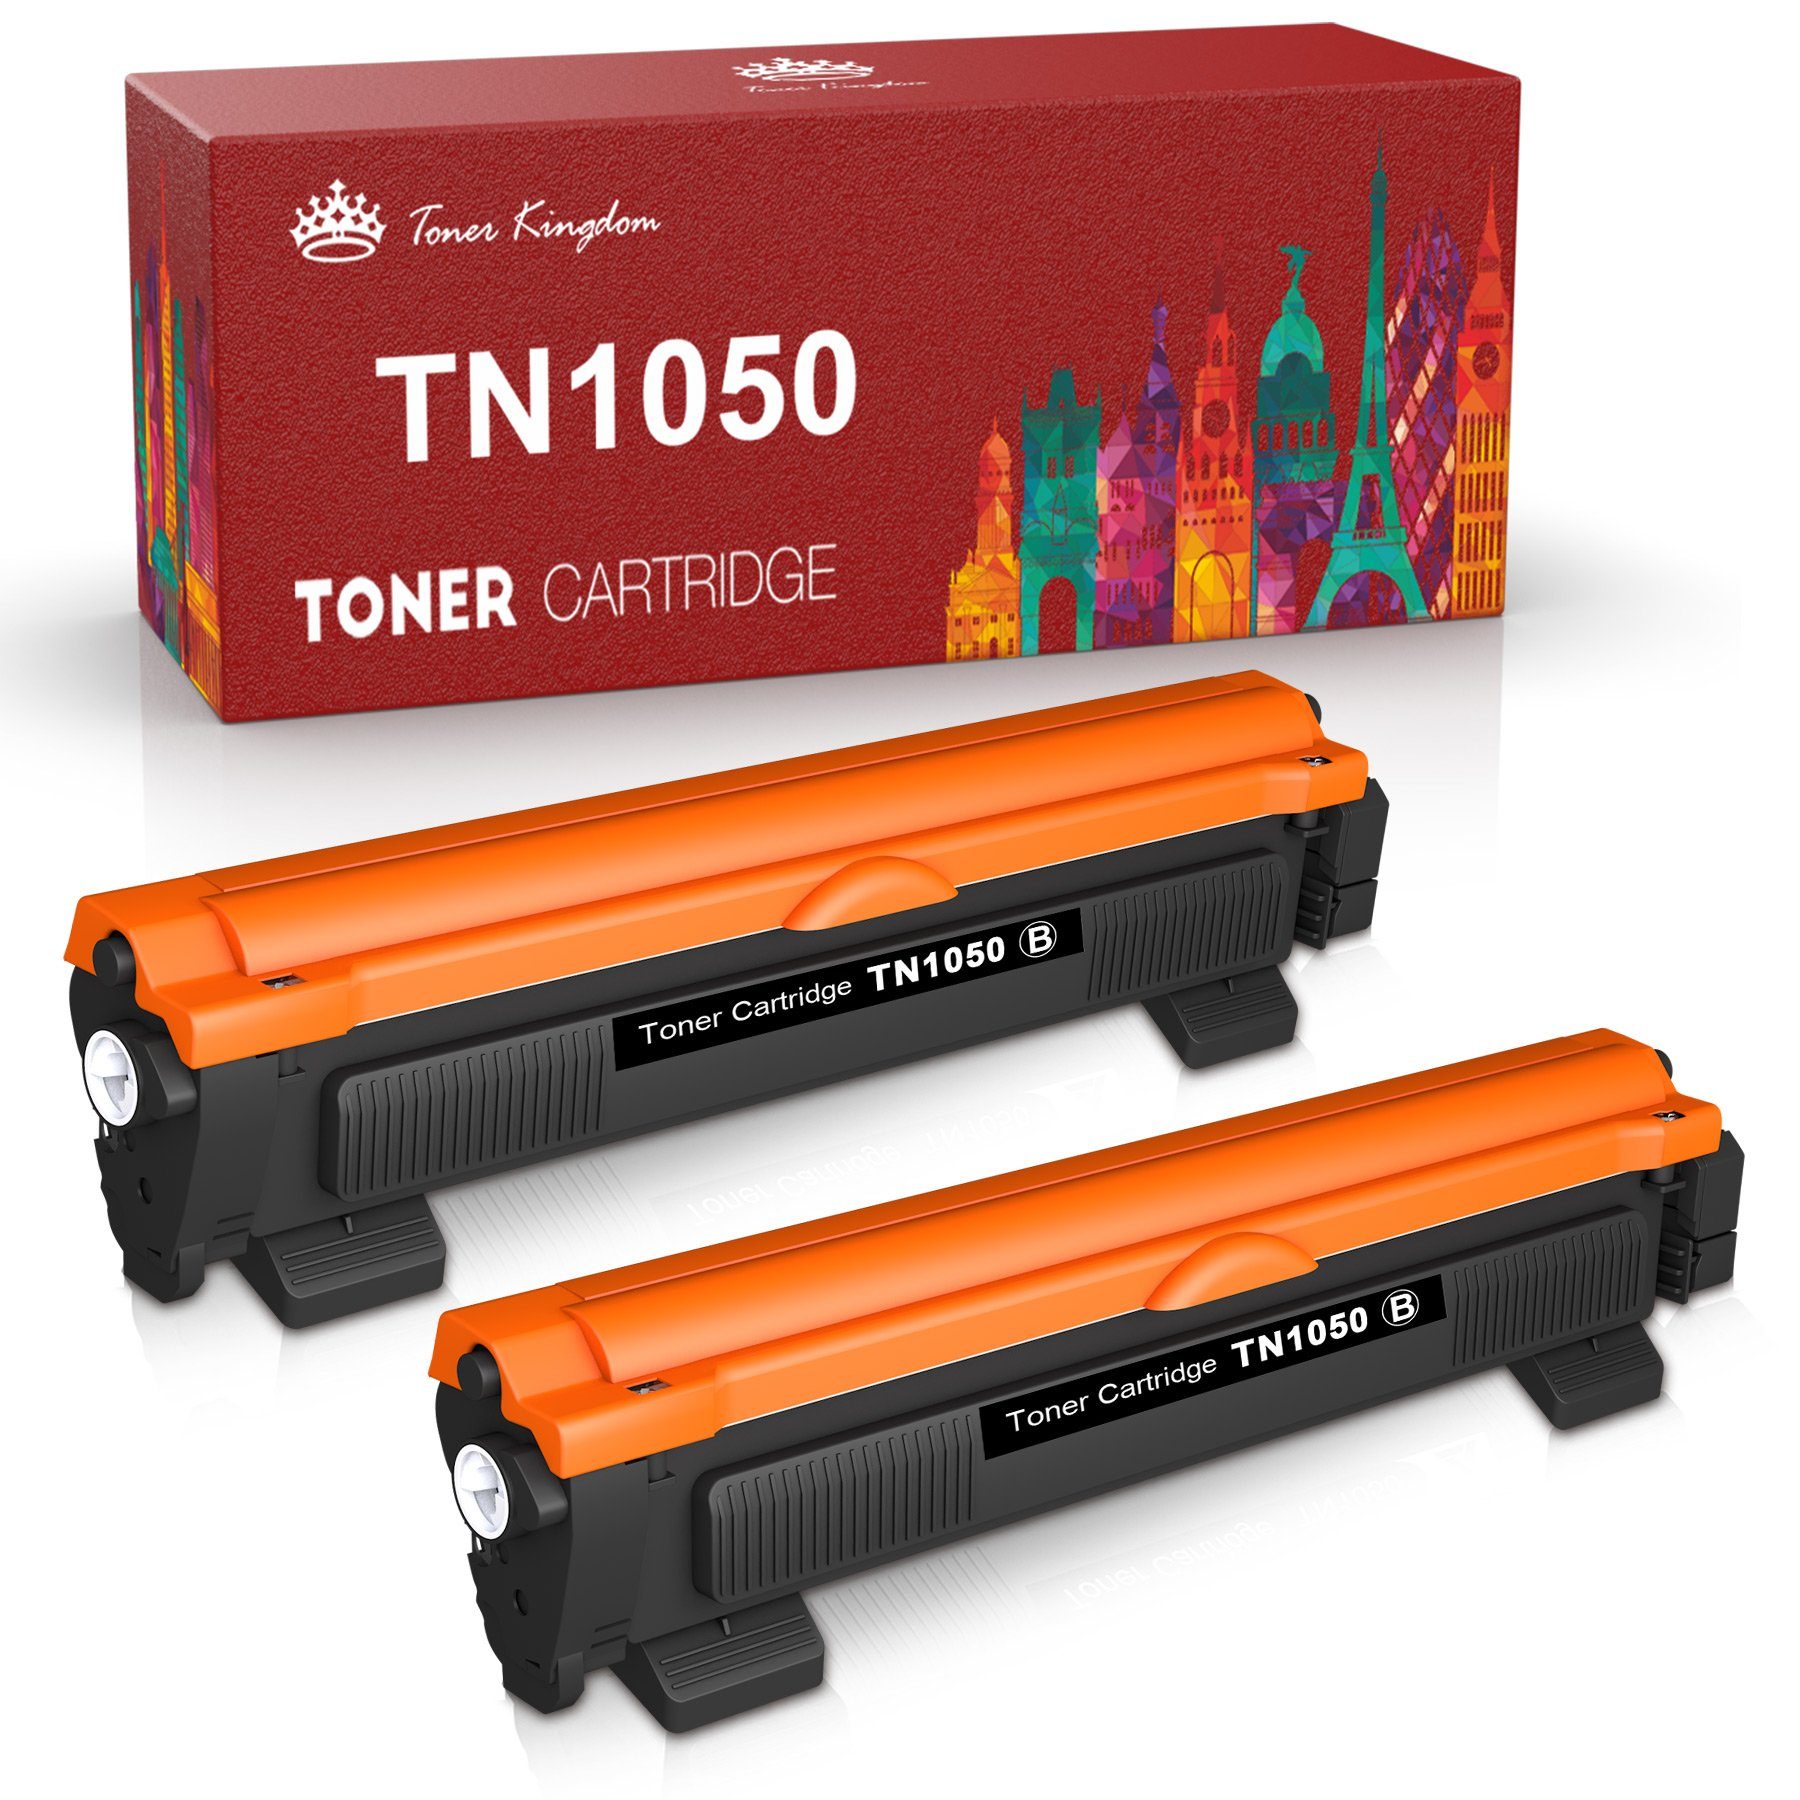 Toner Kingdom Tonerpatrone TN 1050 TN1050 TN-1050 für Brother HL-1110